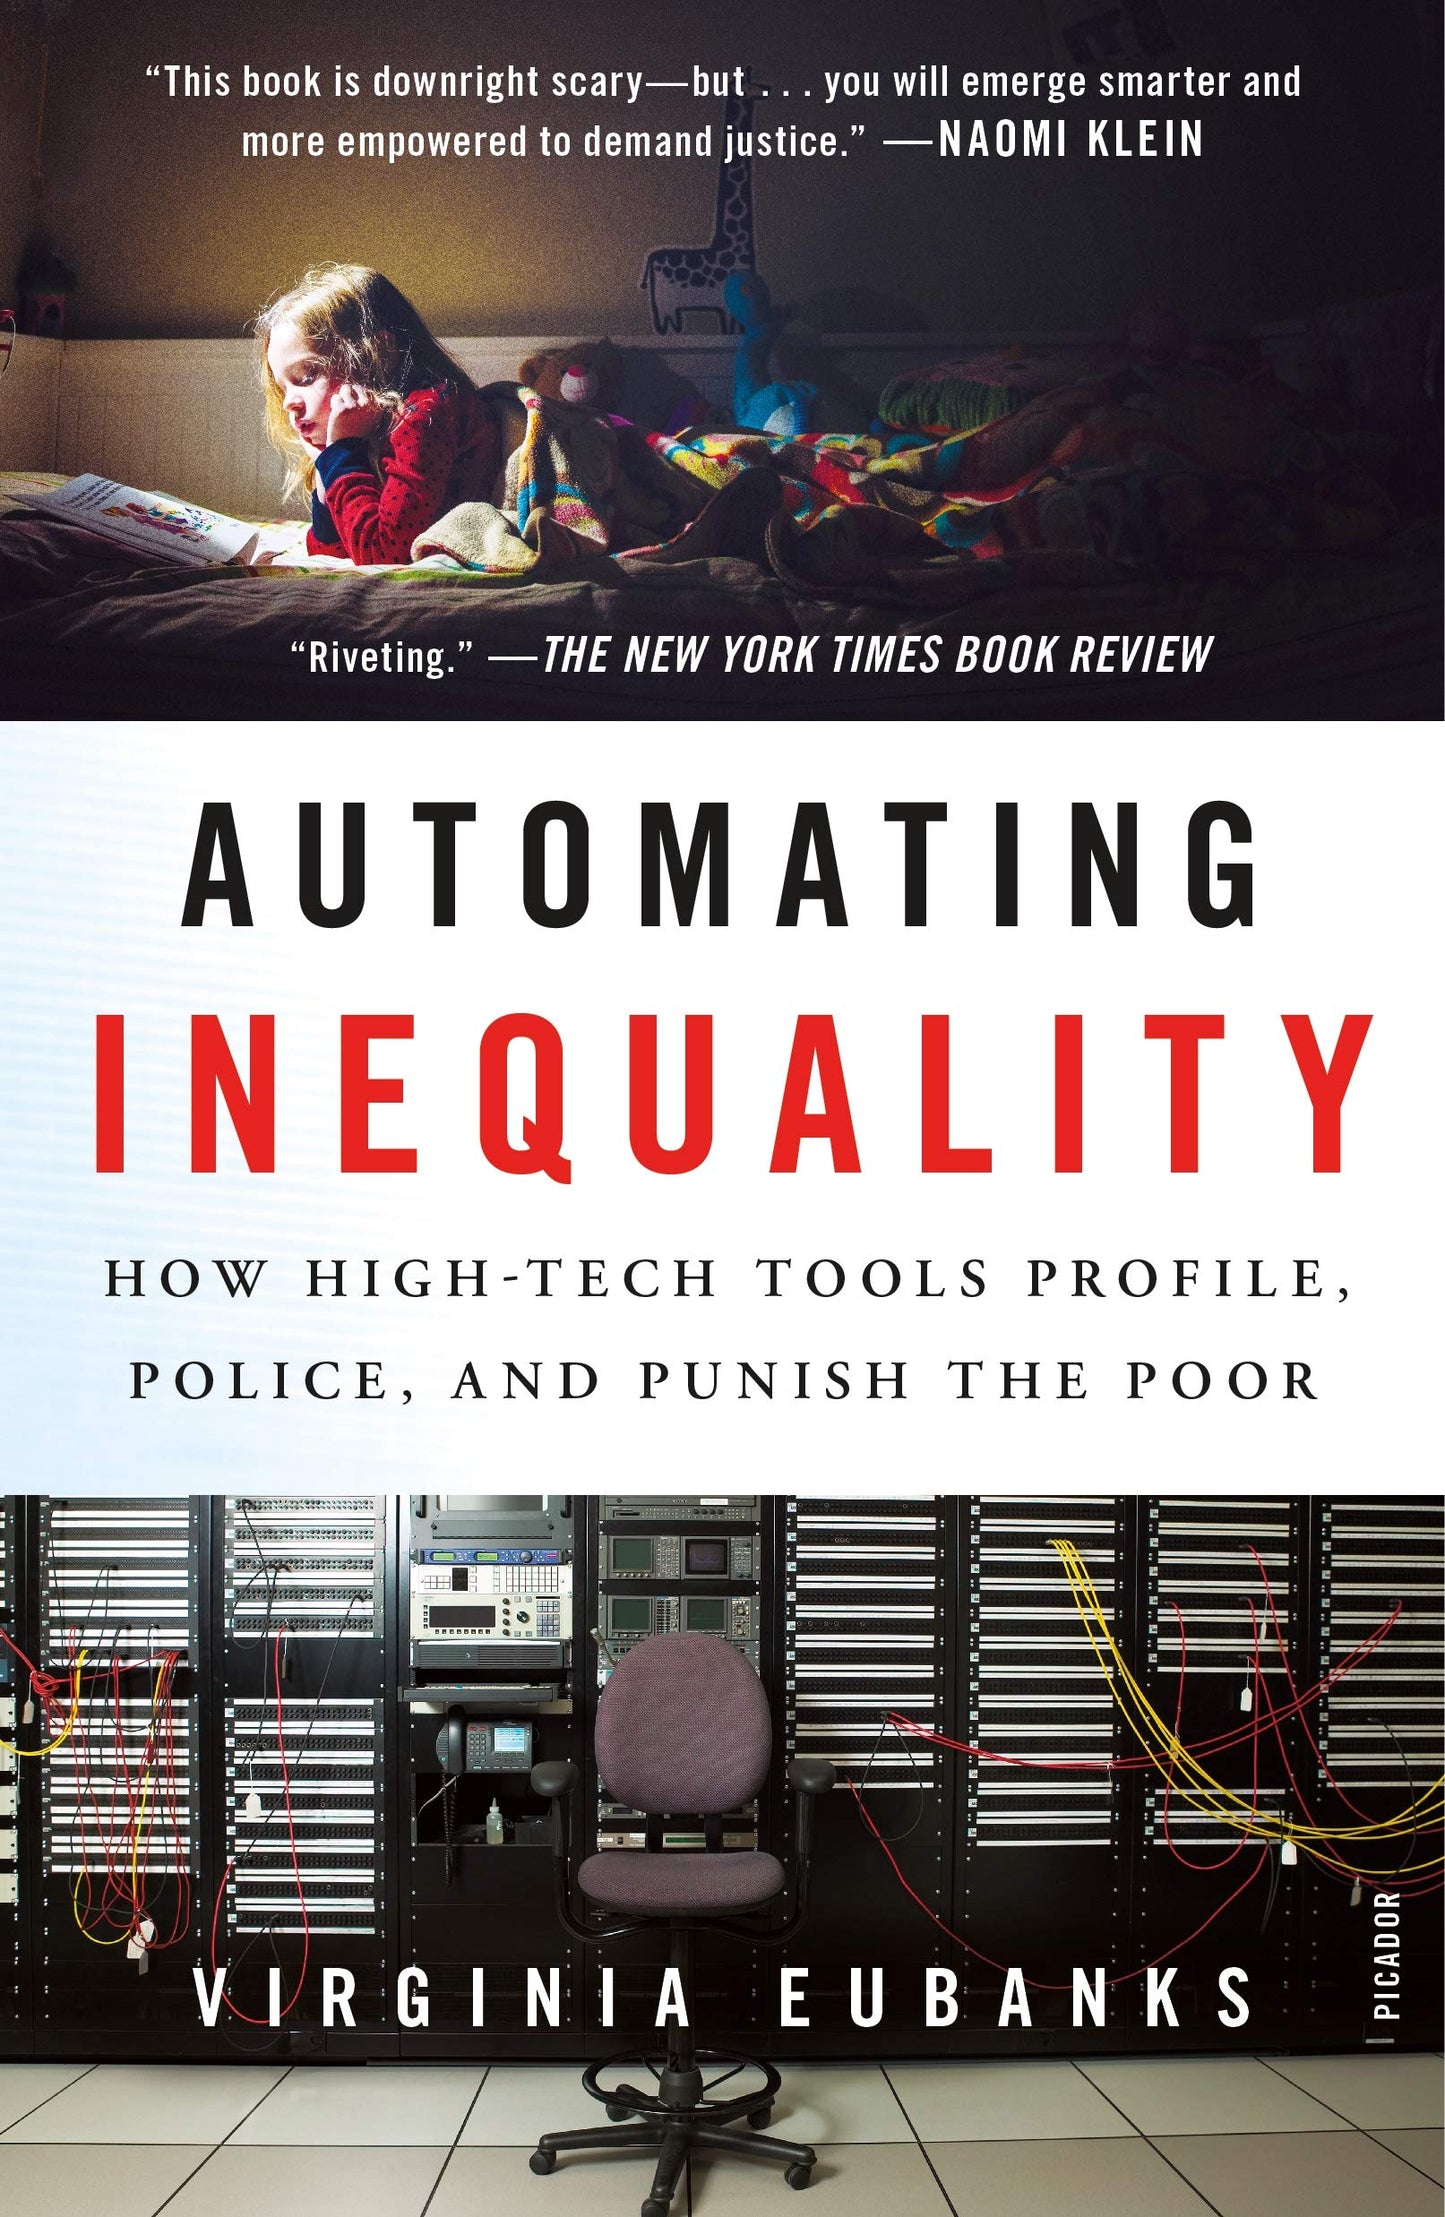 Automating Inequality, by Virginia Eubanks